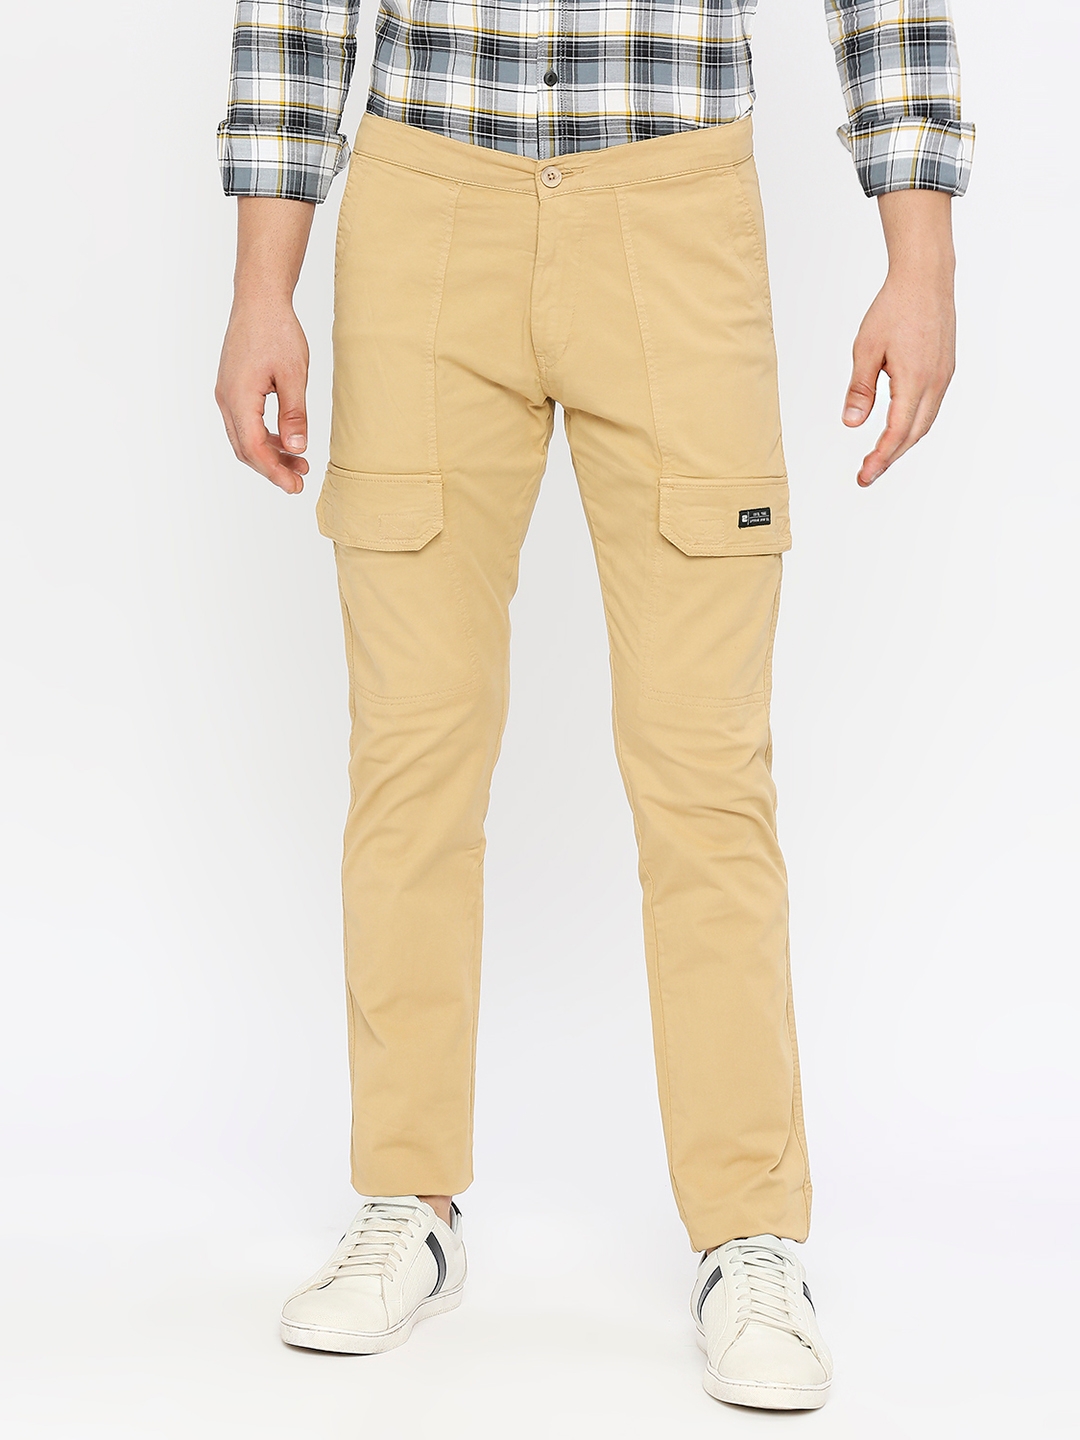 spykar | Spykar Men Light Khaki Cotton Slim Fit Ankle Length Plain Trousers